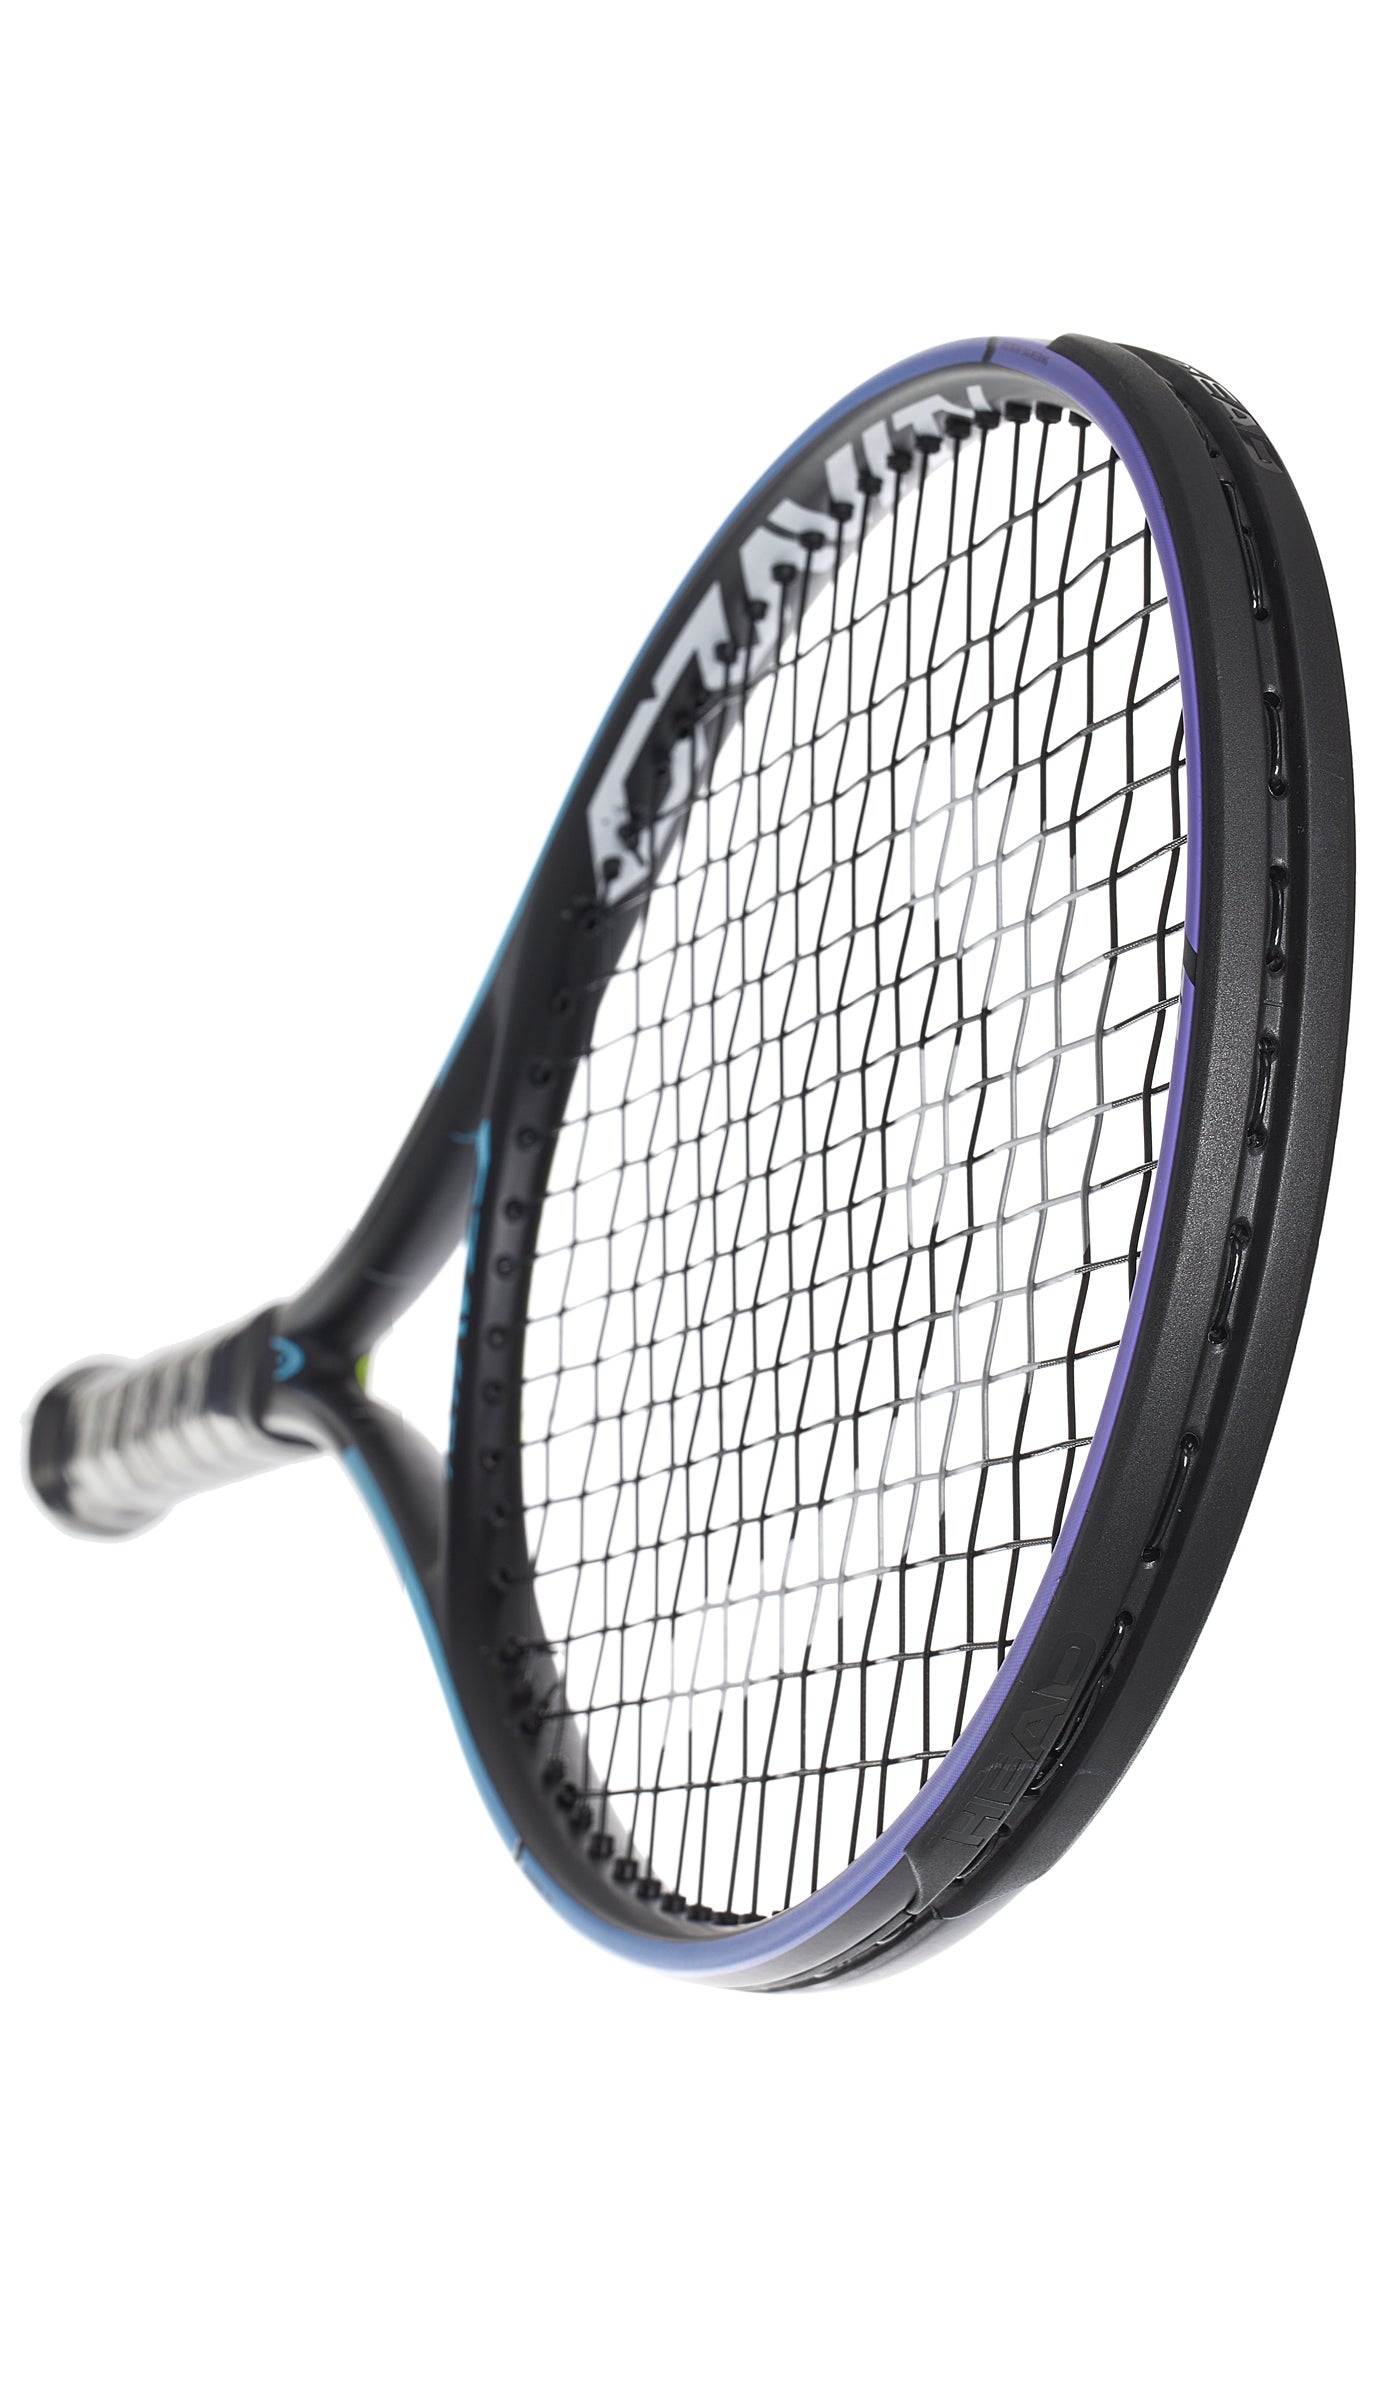 Gravity Jr Head Graphene 360 26 Tennis Racquet Authorized Dealer 